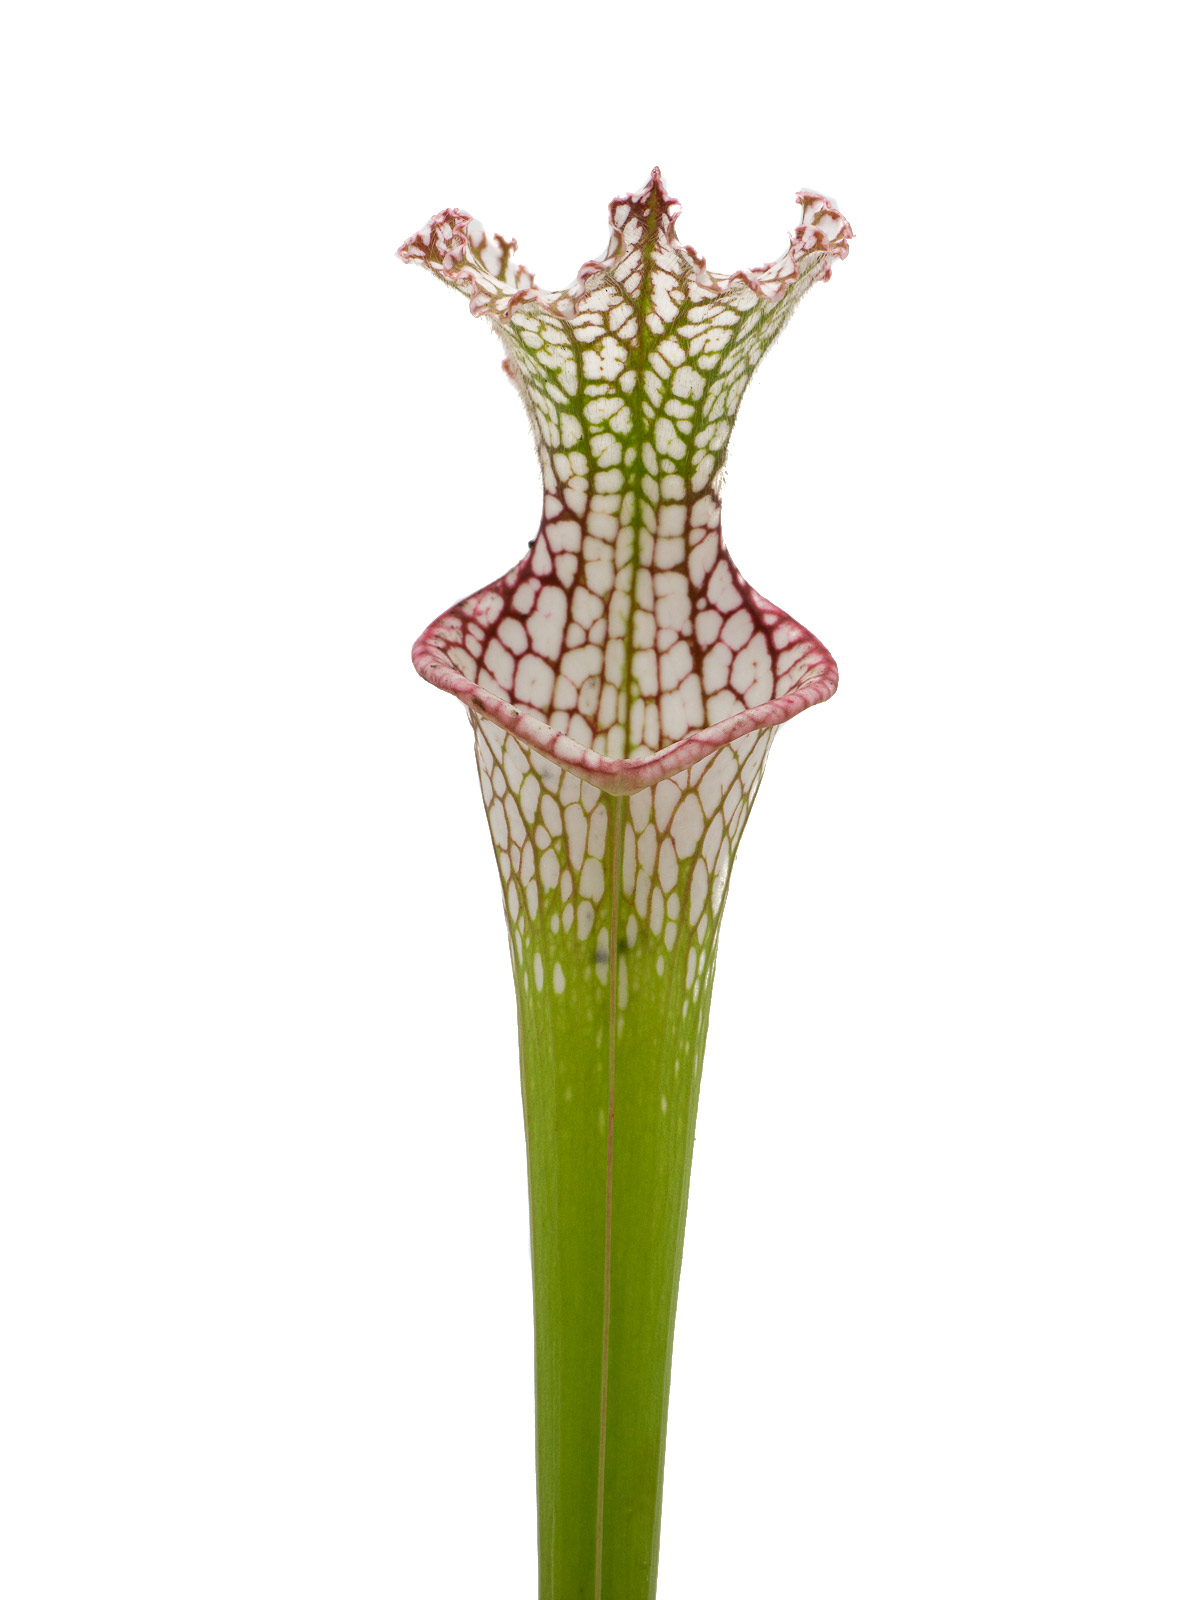 Sarracenia leucophylla - Fabia Krasna, Mirek Srba